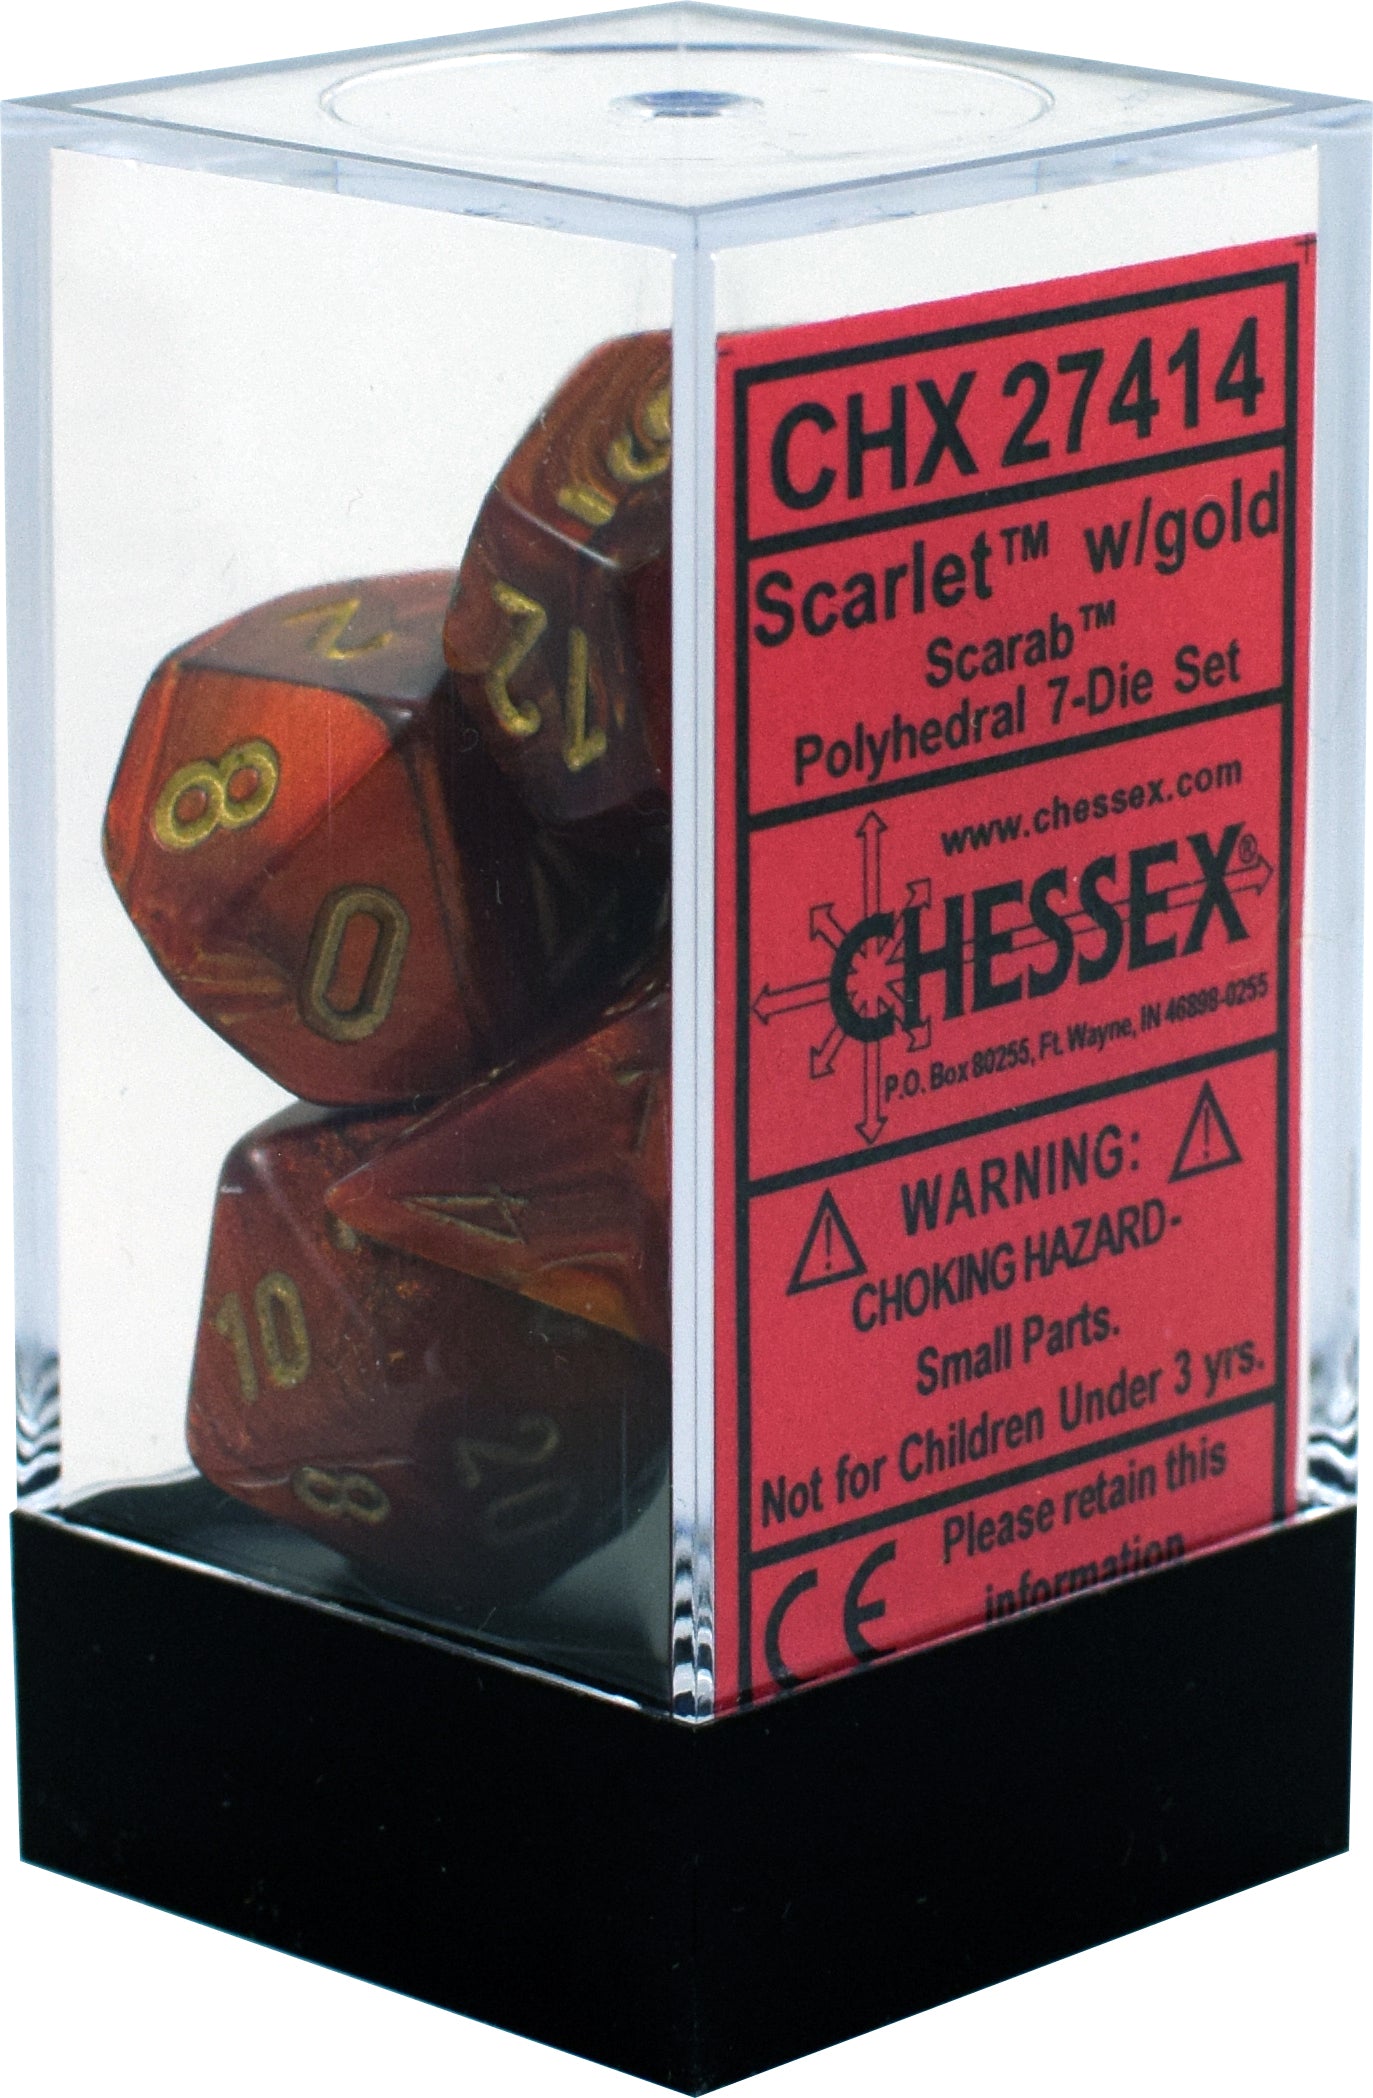 CHESSEX SCARAB 7-DIE SET SCARLET/GOLD (CHX27414) | Eastridge Sports Cards & Games